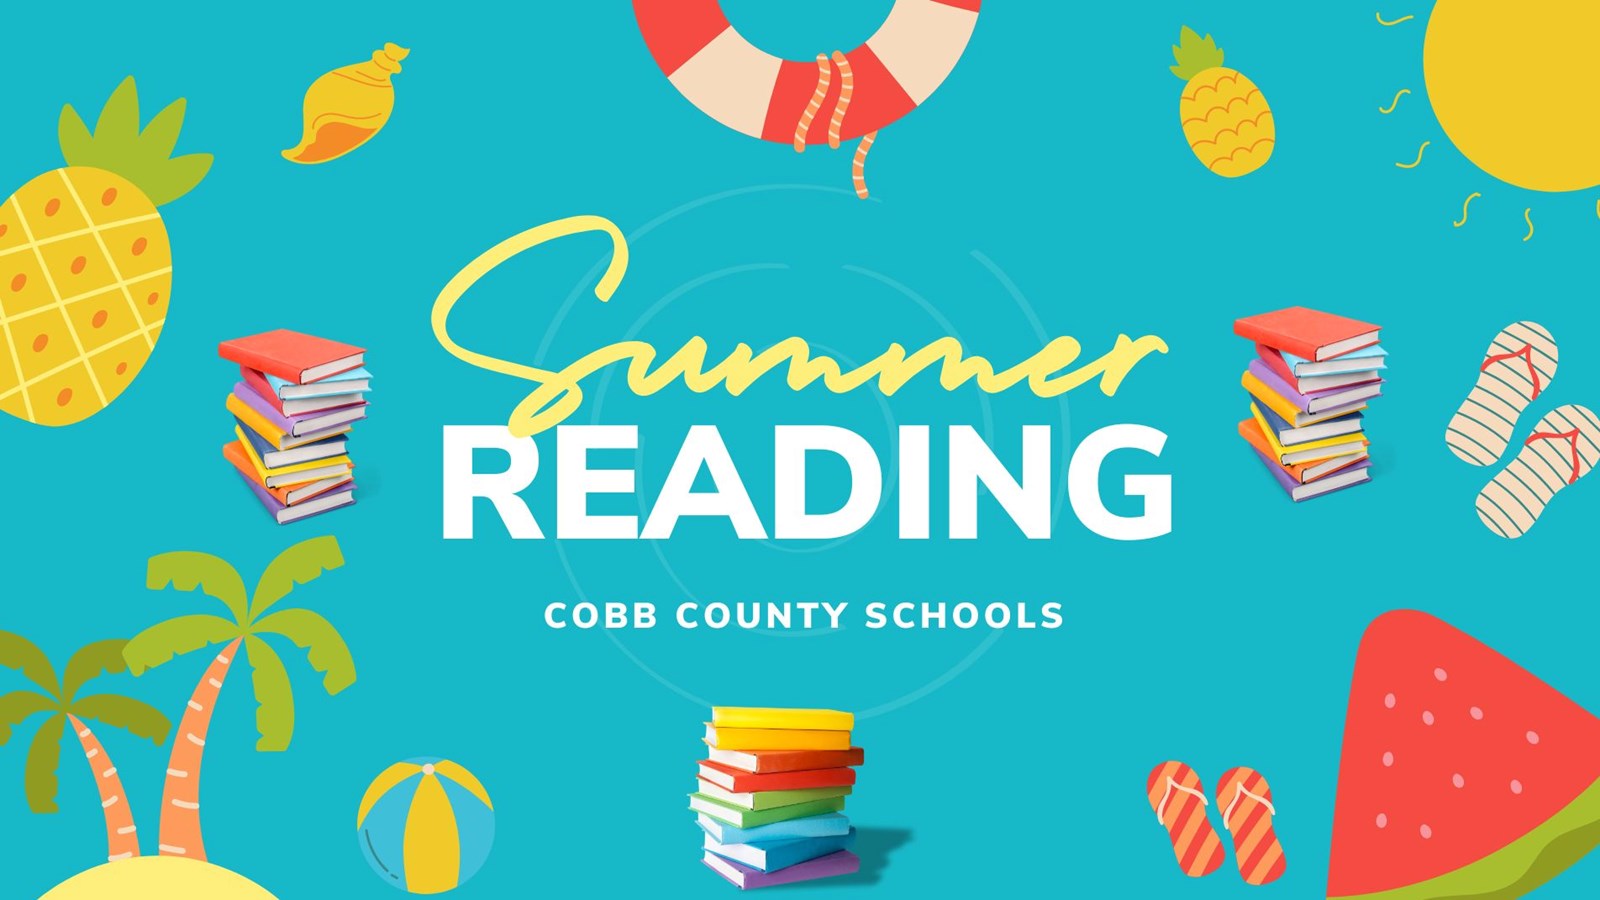 Summer Reading Cobb County Schools